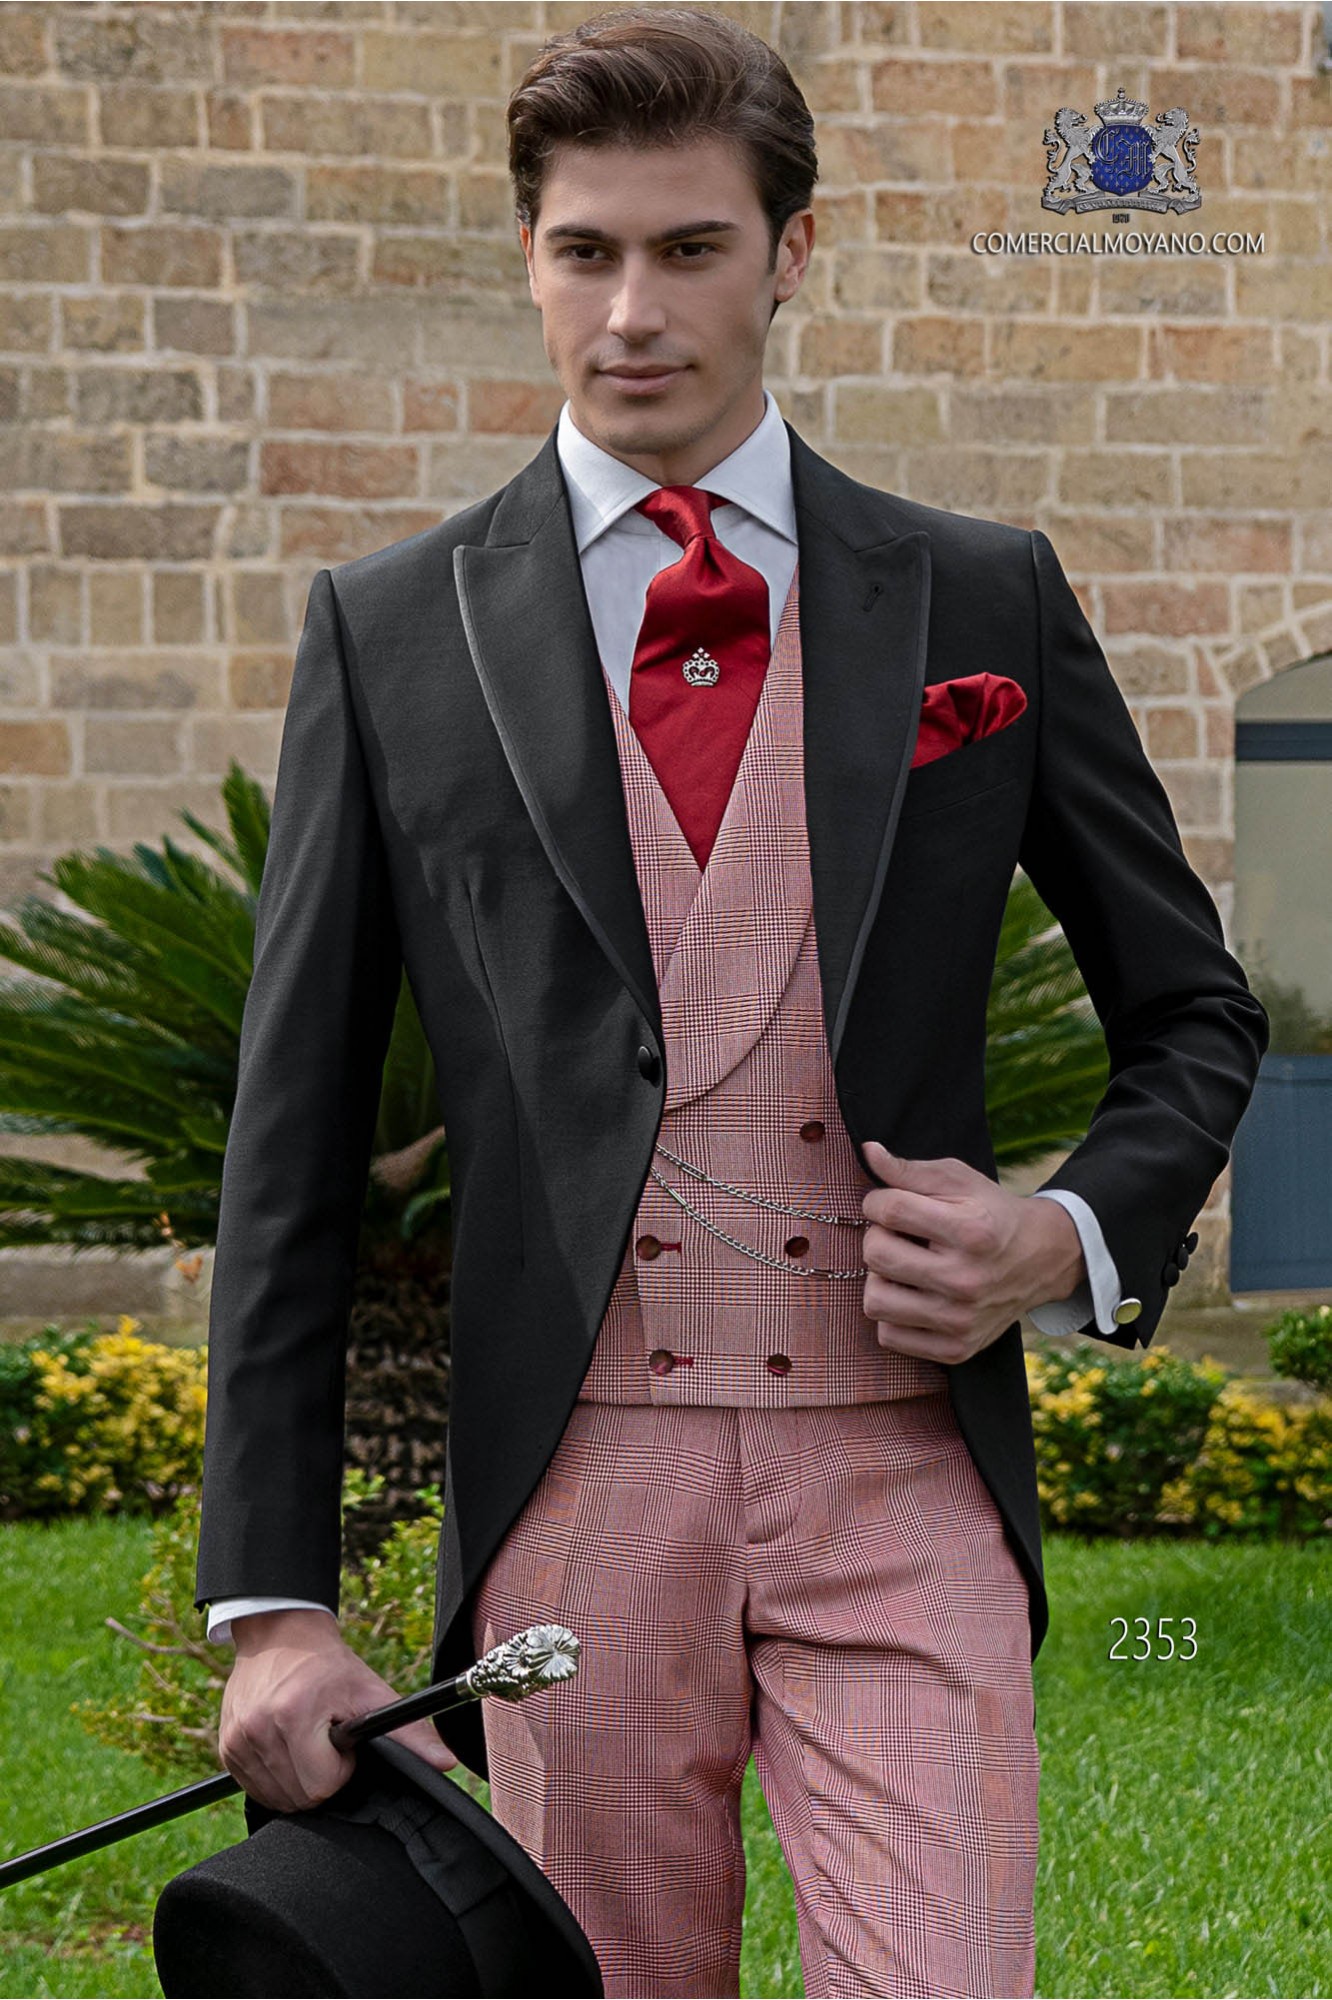 Chaqué de novio negro con pantalón príncipe de gales modelo: 2353 Mario Moyano colección Gentleman